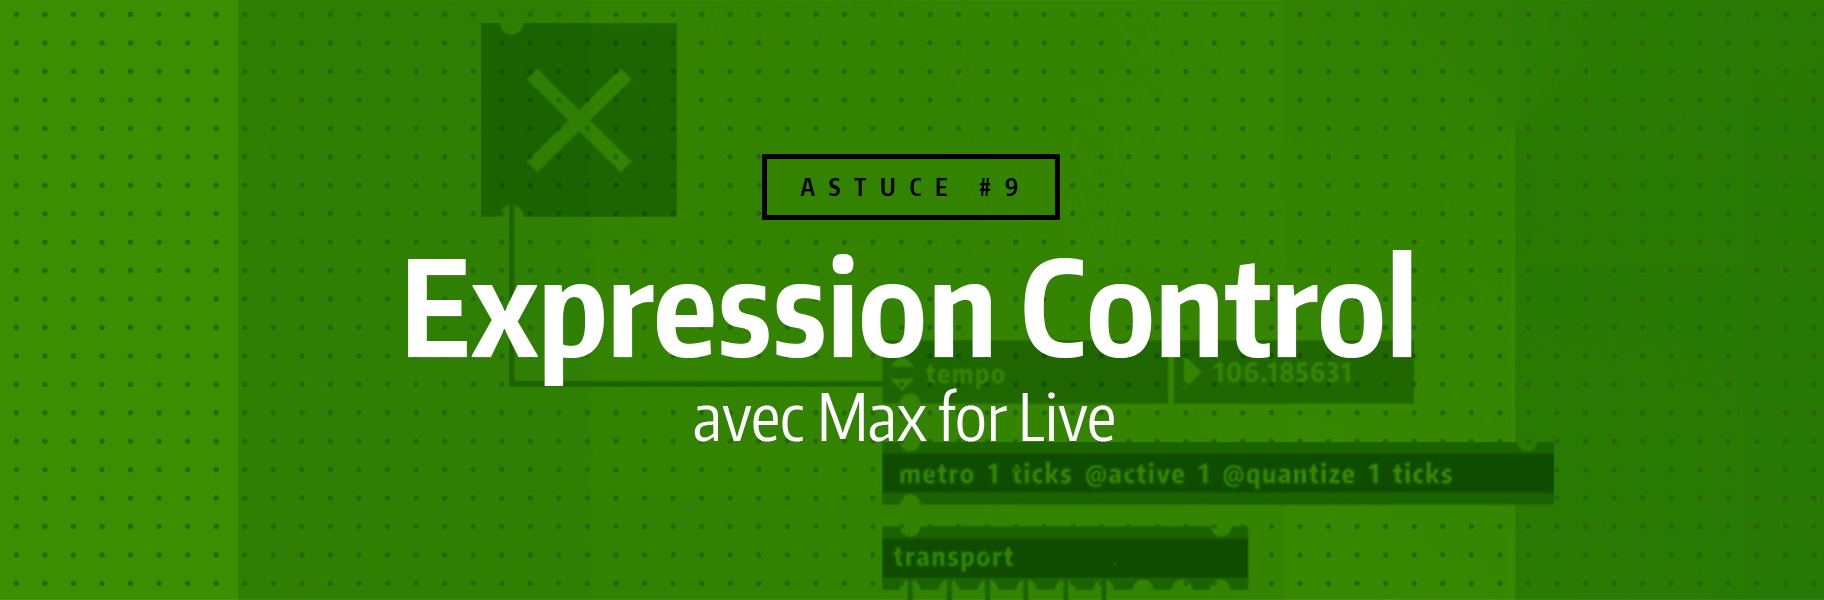 Astuce rapide #9 - Expression Control avec Max for Live